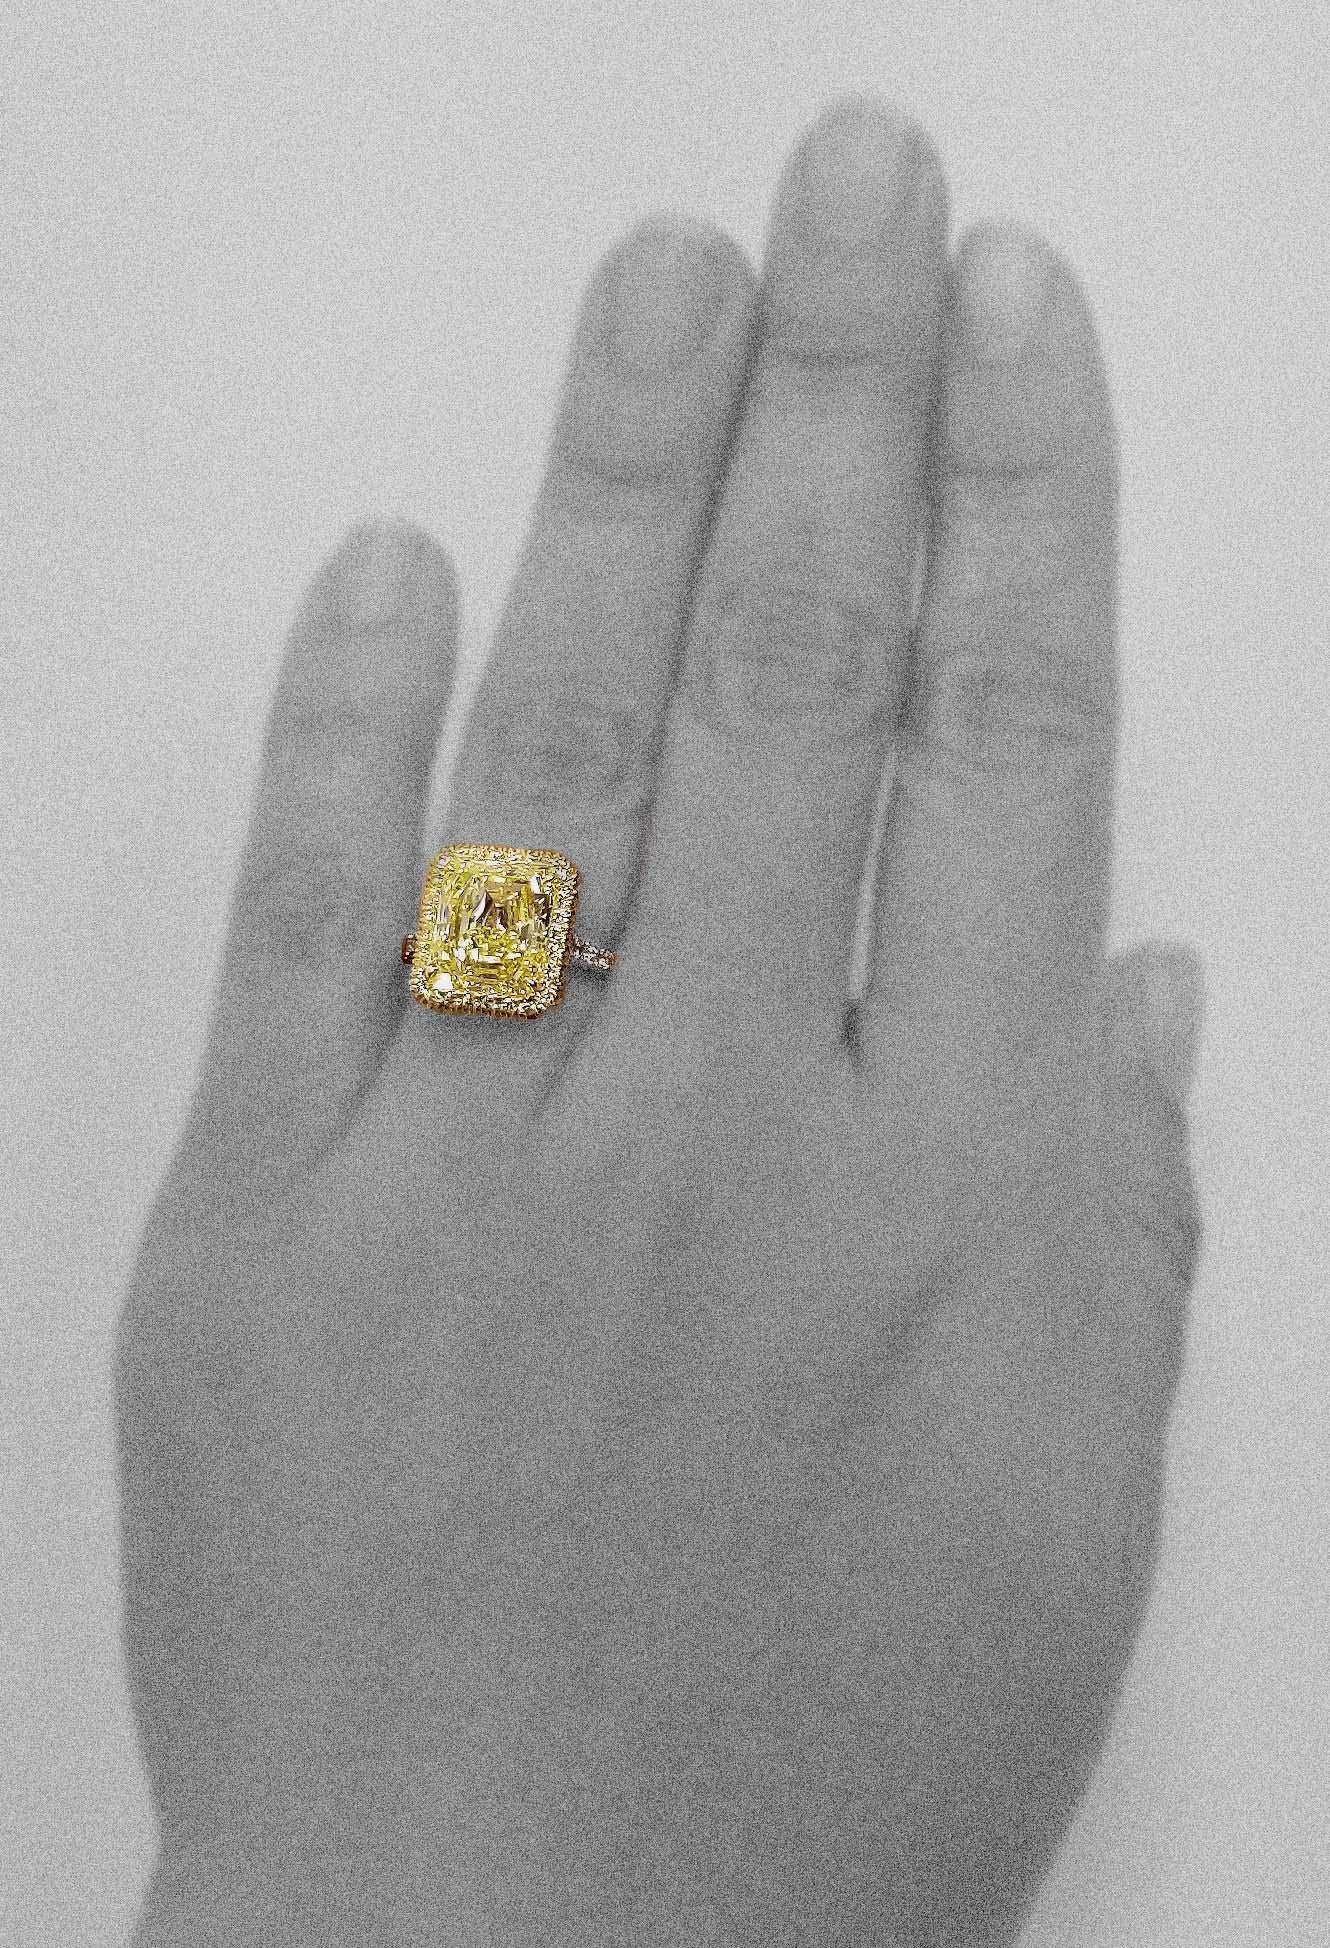 Scarselli 5 Carat Emerald Fancy Intense Yellow Diamond Engagement Ring GIA 3